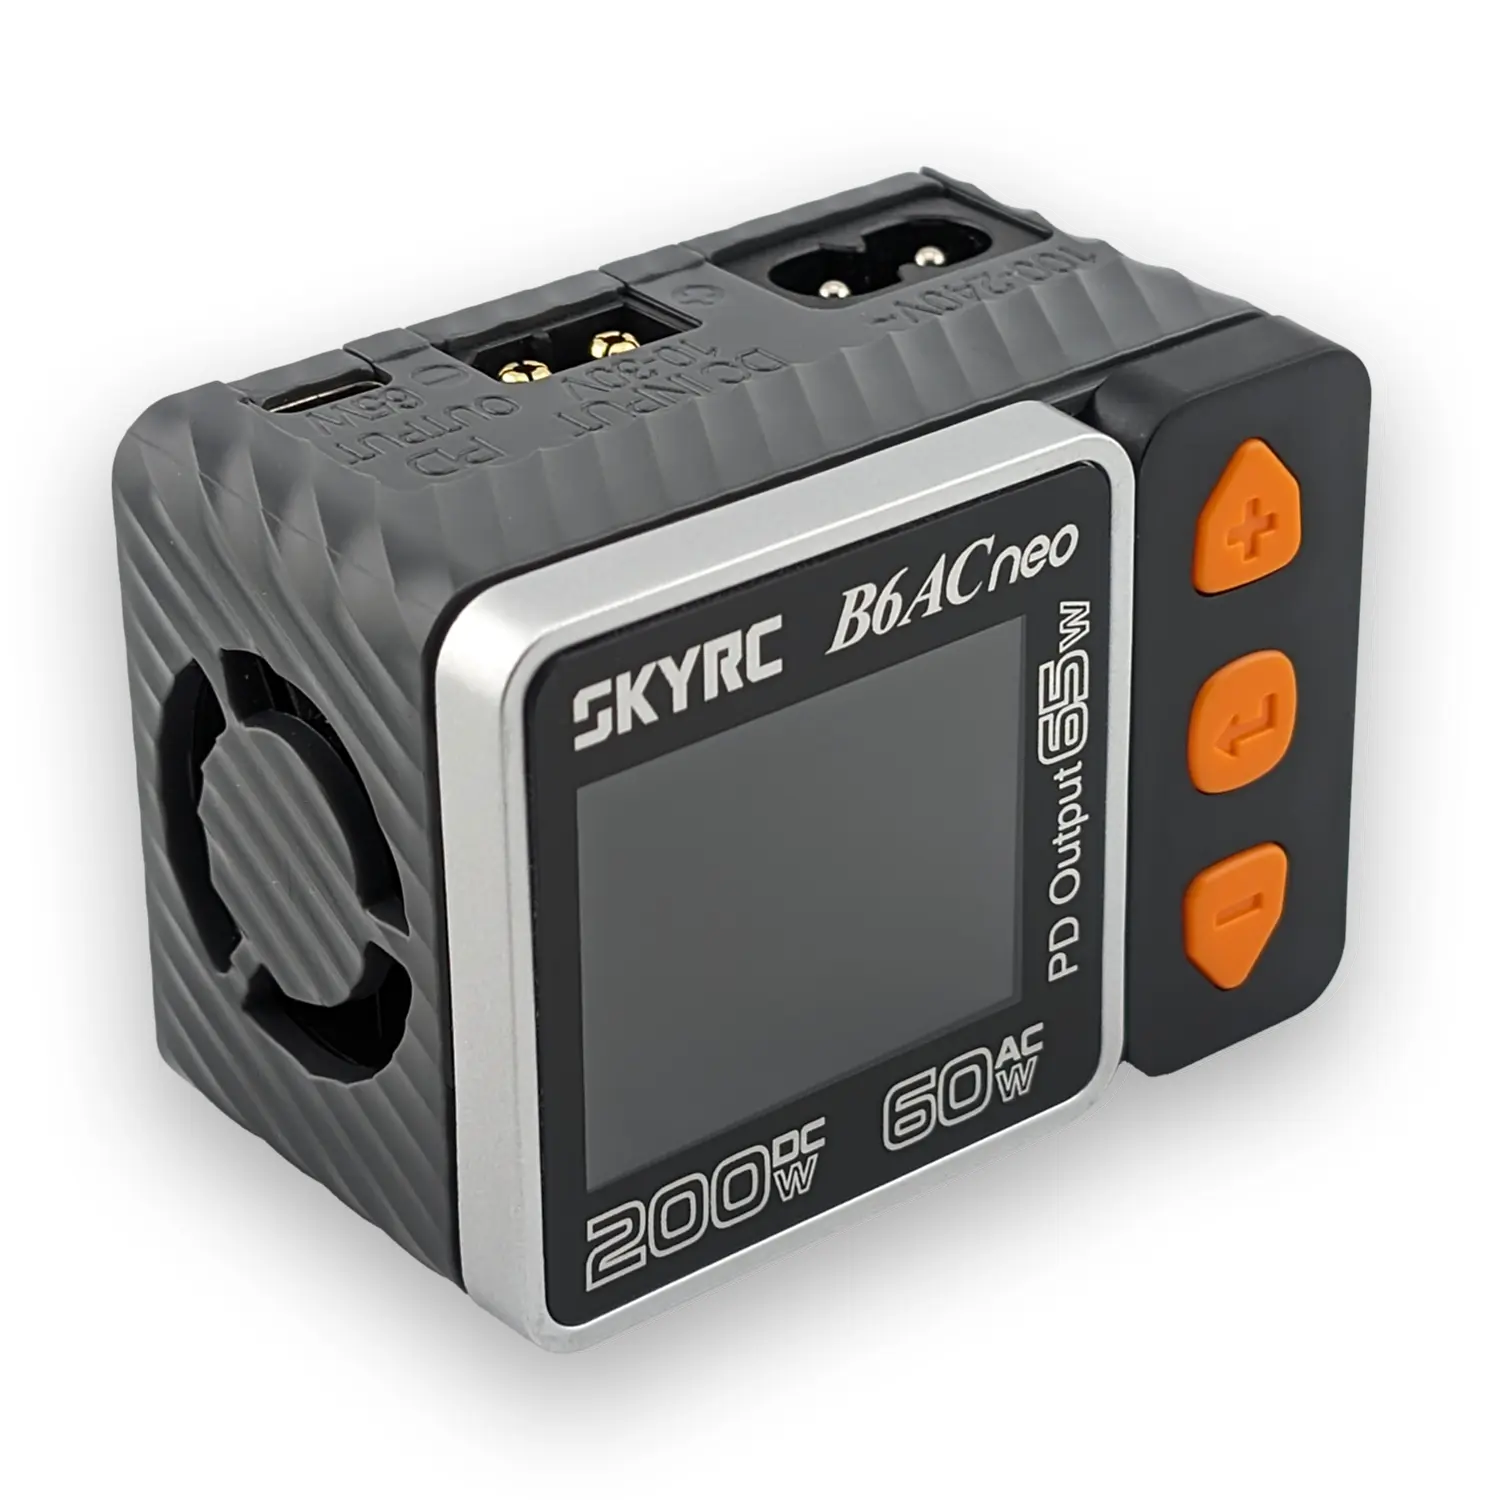 SKYRC B6AC Neo Balance Charger 200W/60W for LiPo Batteries